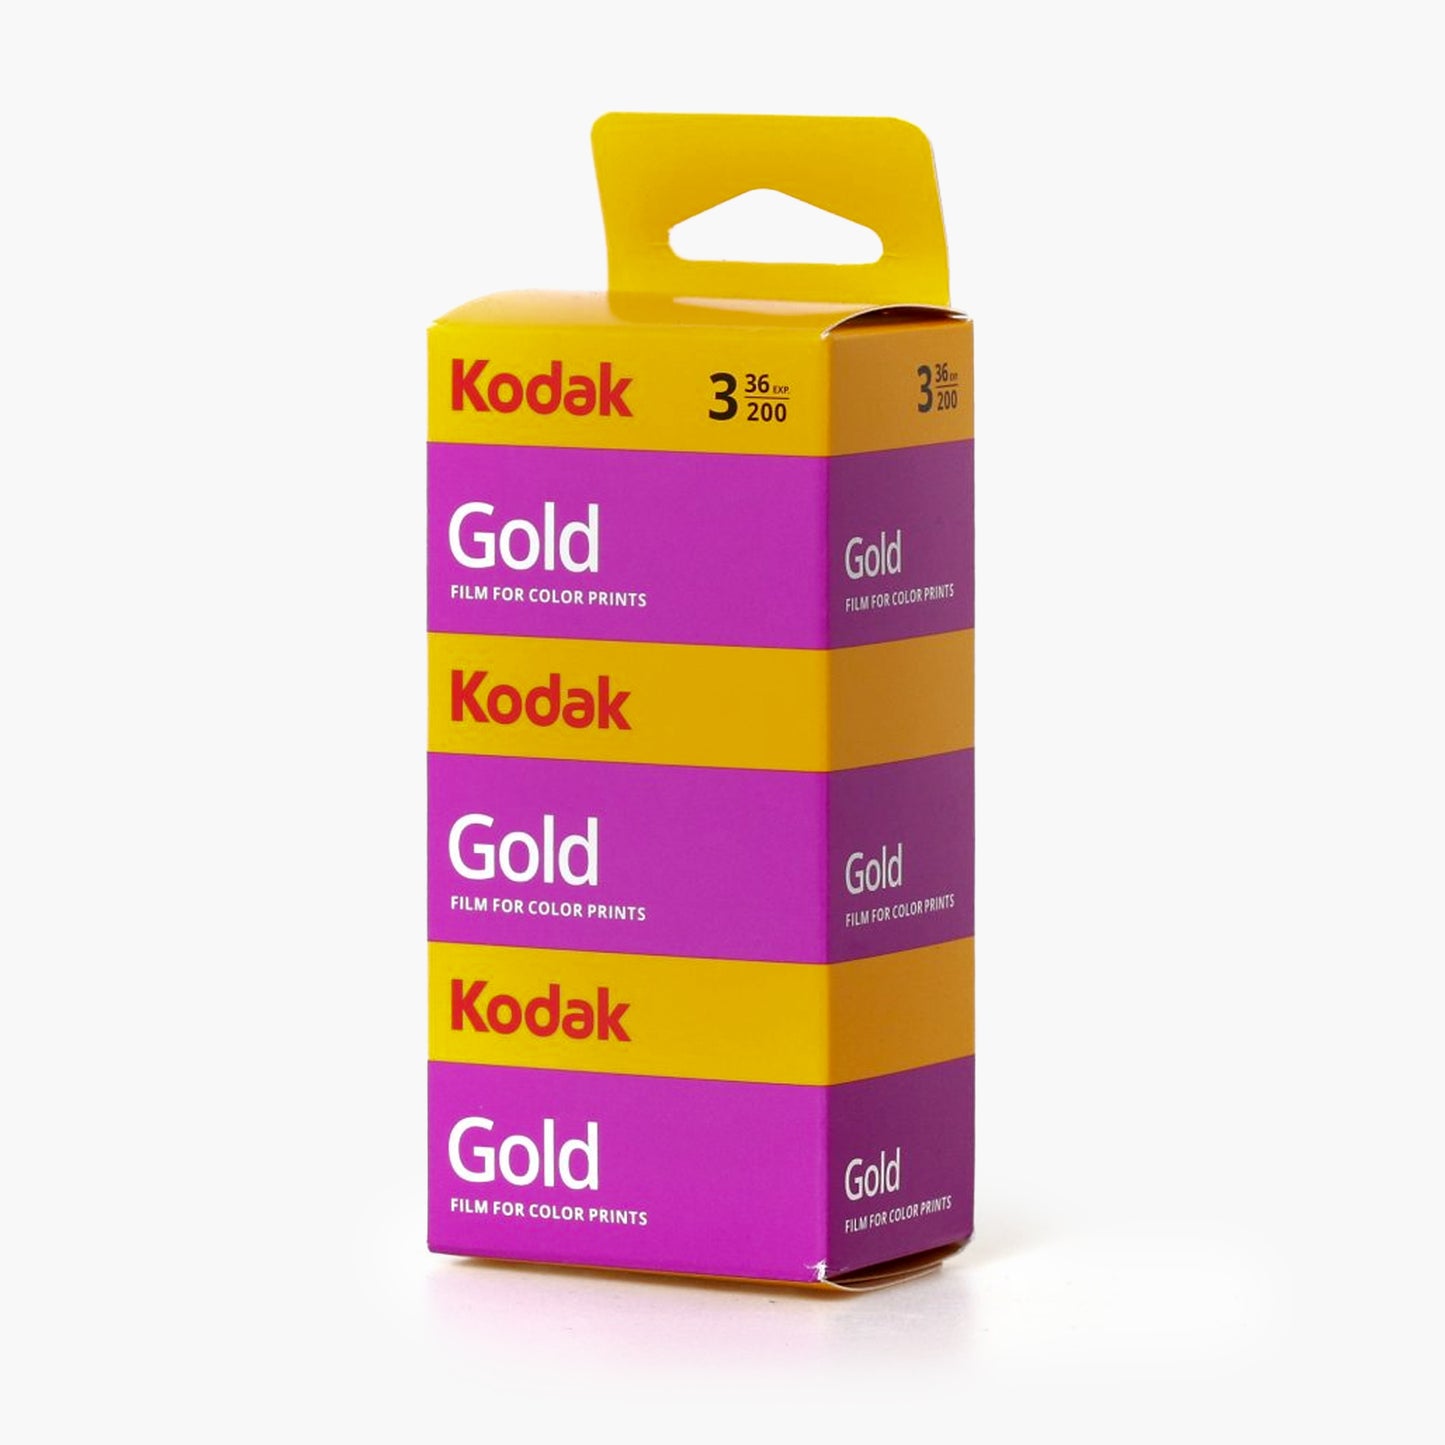 Kodak Gold 200 35mm - 3 PACK